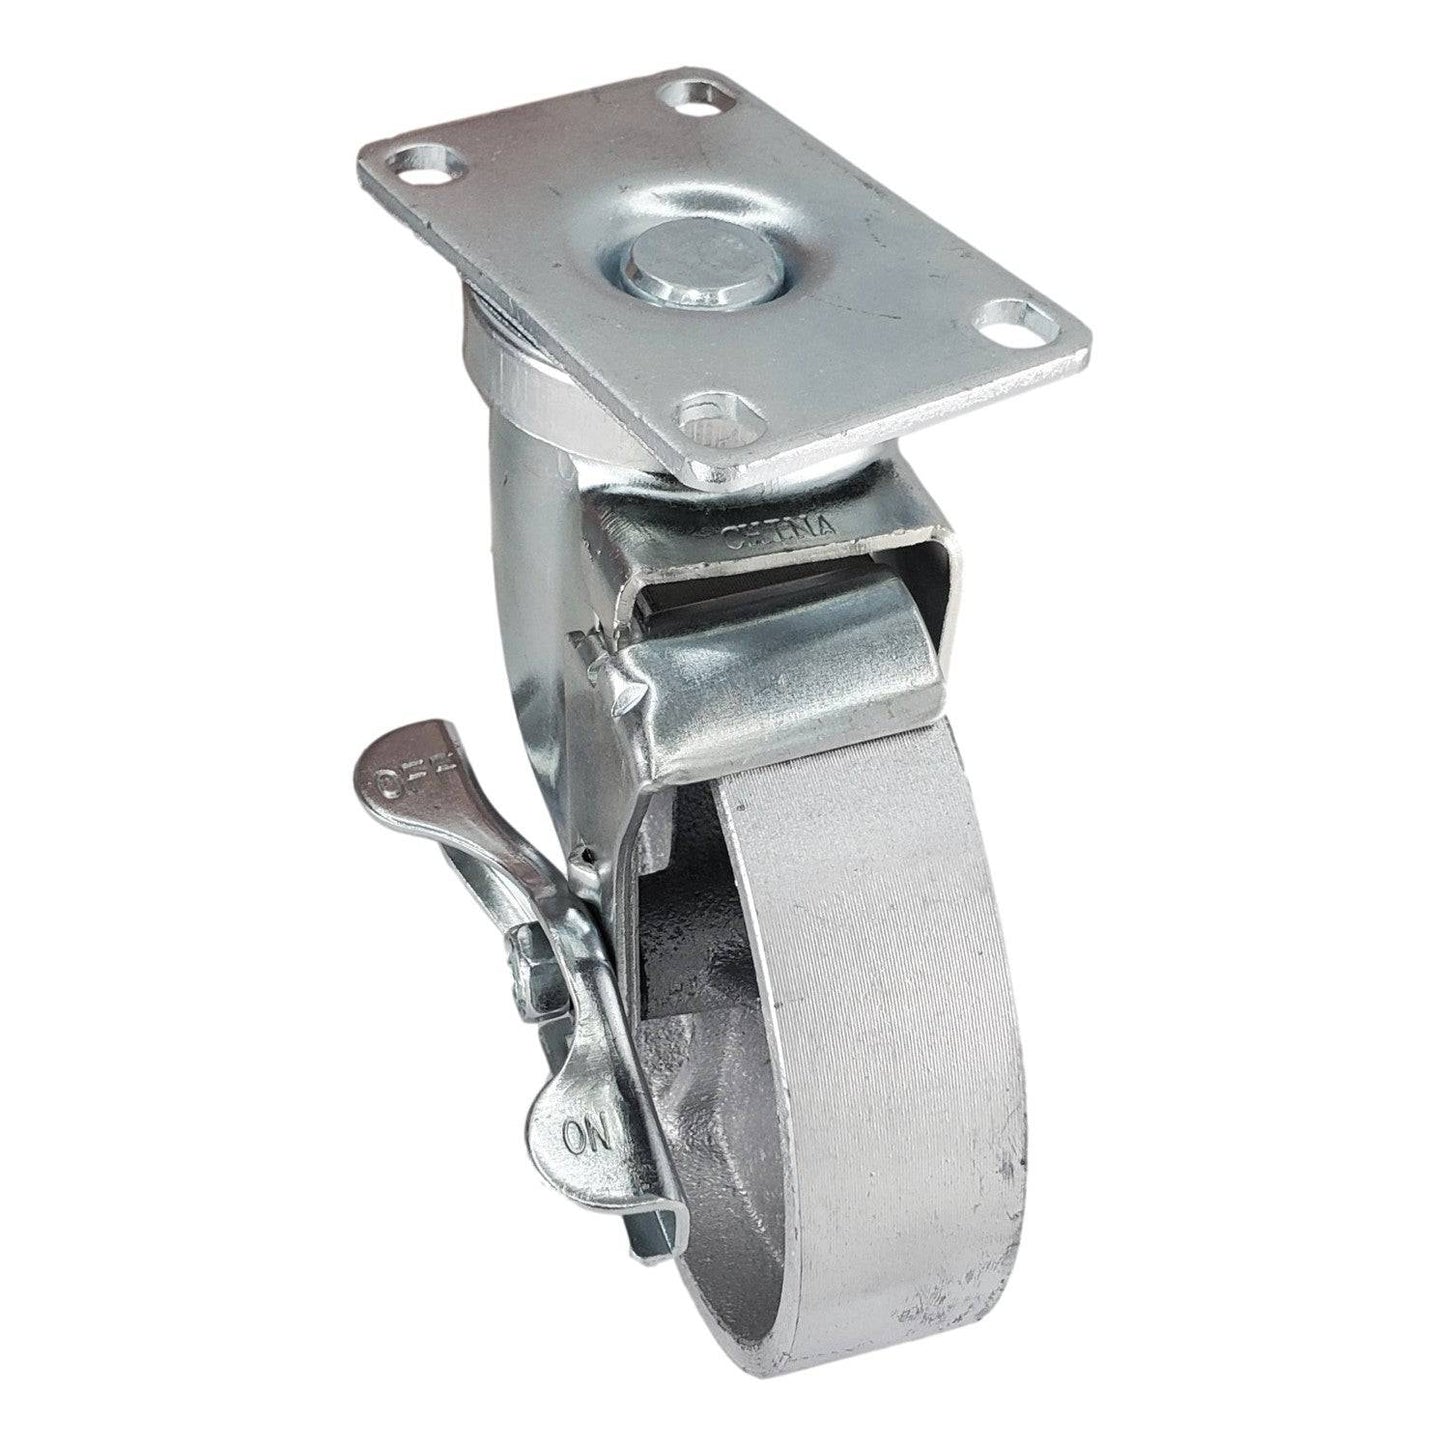 5" x 1-1/4" Semi-Steel Wheel Swivel Caster w/ Top Lock Brake - 300 lbs. Capacity - Durable Superior Casters